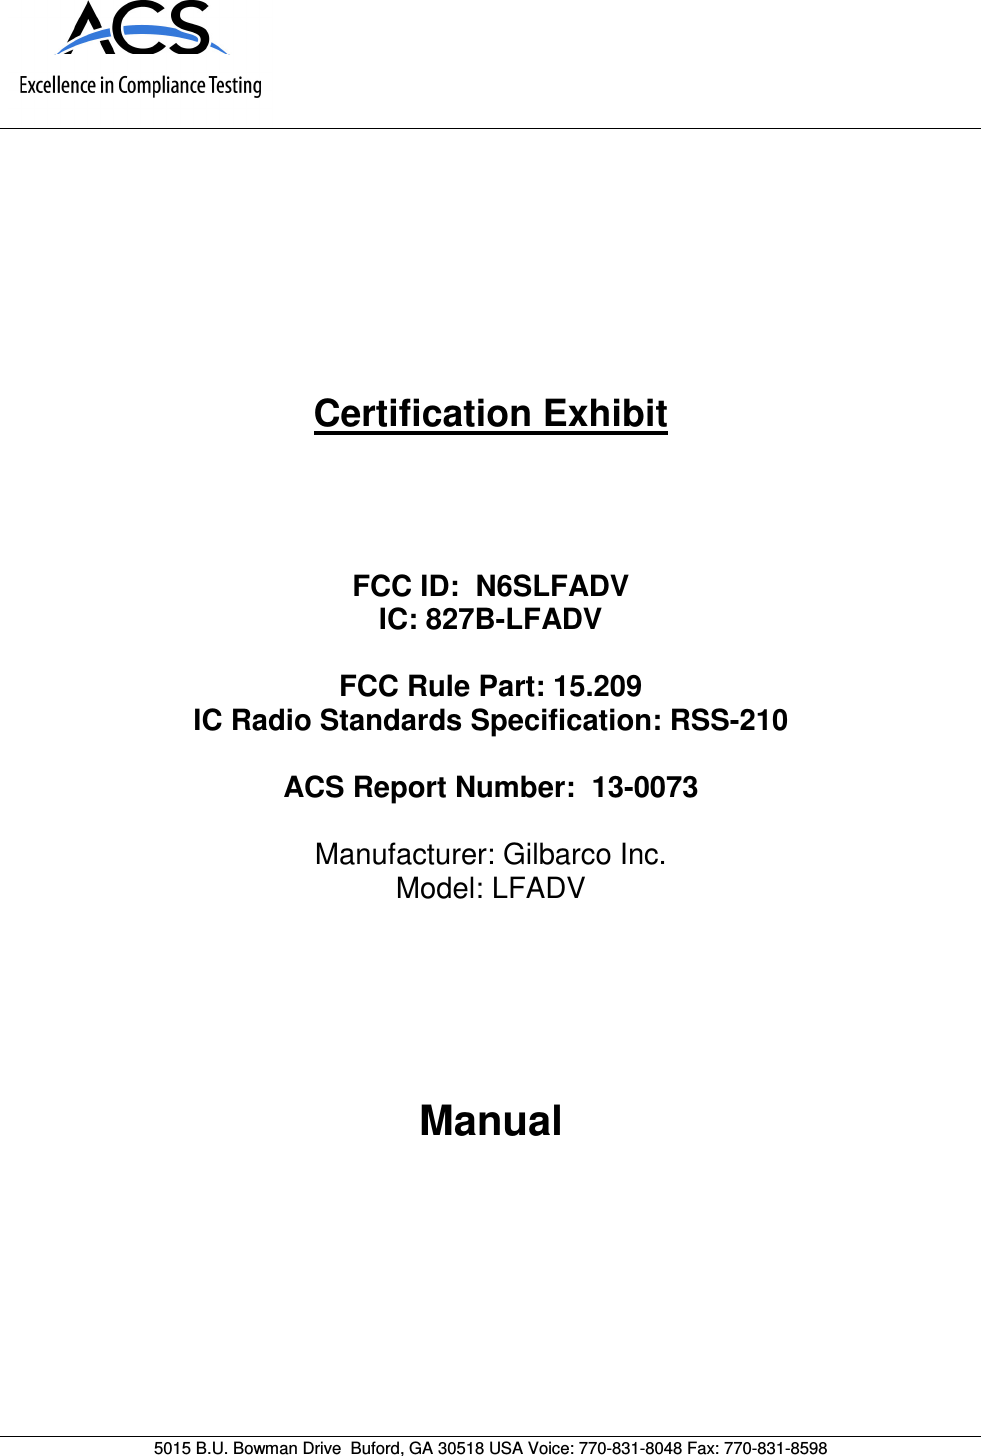      5015 B.U. Bowman Drive  Buford, GA 30518 USA Voice: 770-831-8048 Fax: 770-831-8598   Certification Exhibit     FCC ID:  N6SLFADV IC: 827B-LFADV  FCC Rule Part: 15.209 IC Radio Standards Specification: RSS-210  ACS Report Number:  13-0073  Manufacturer: Gilbarco Inc. Model: LFADV     Manual  